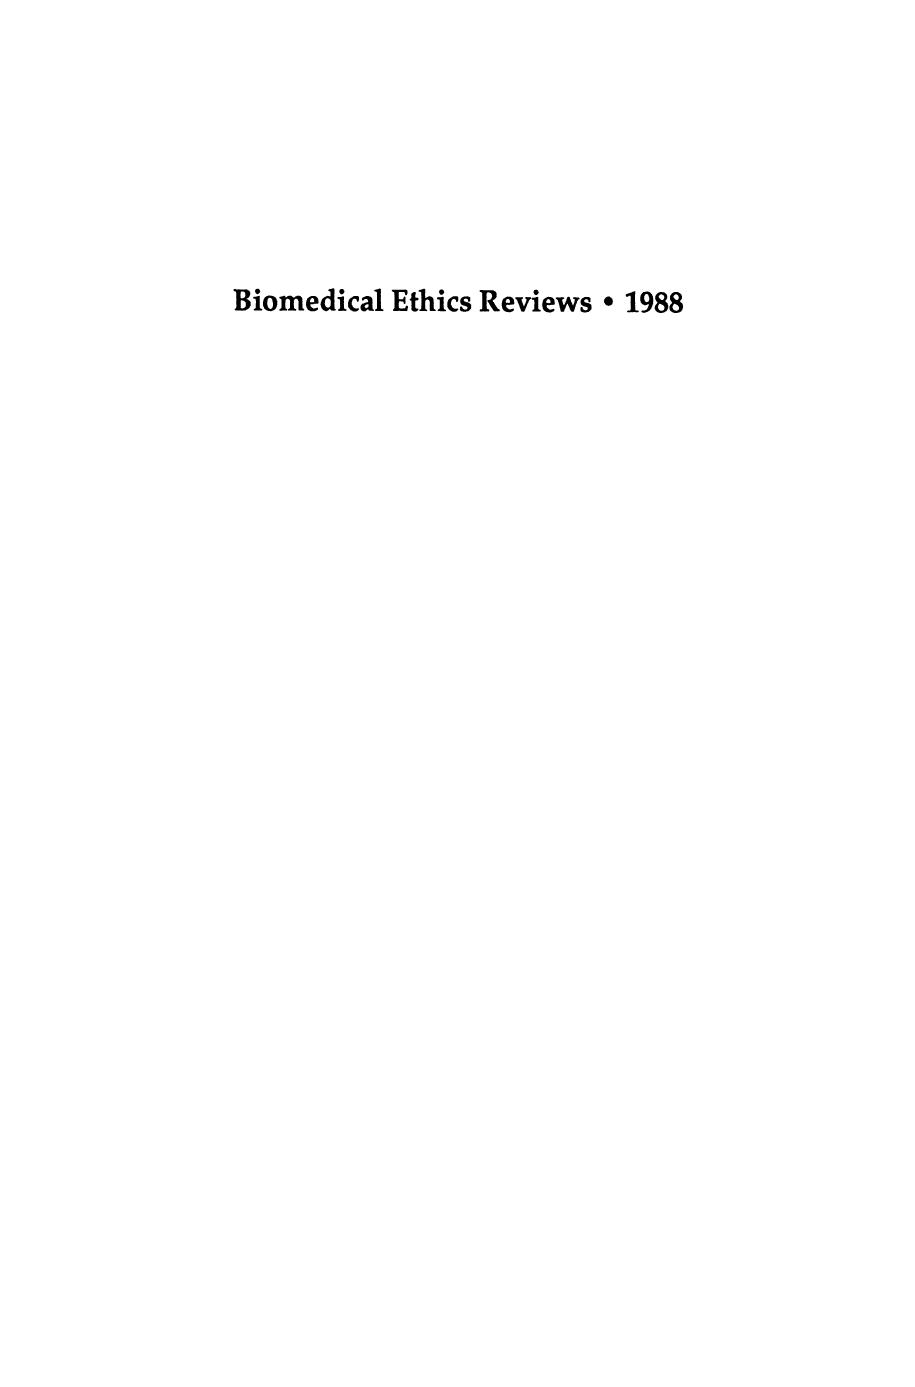 Biomedical ethics reviews : 1988